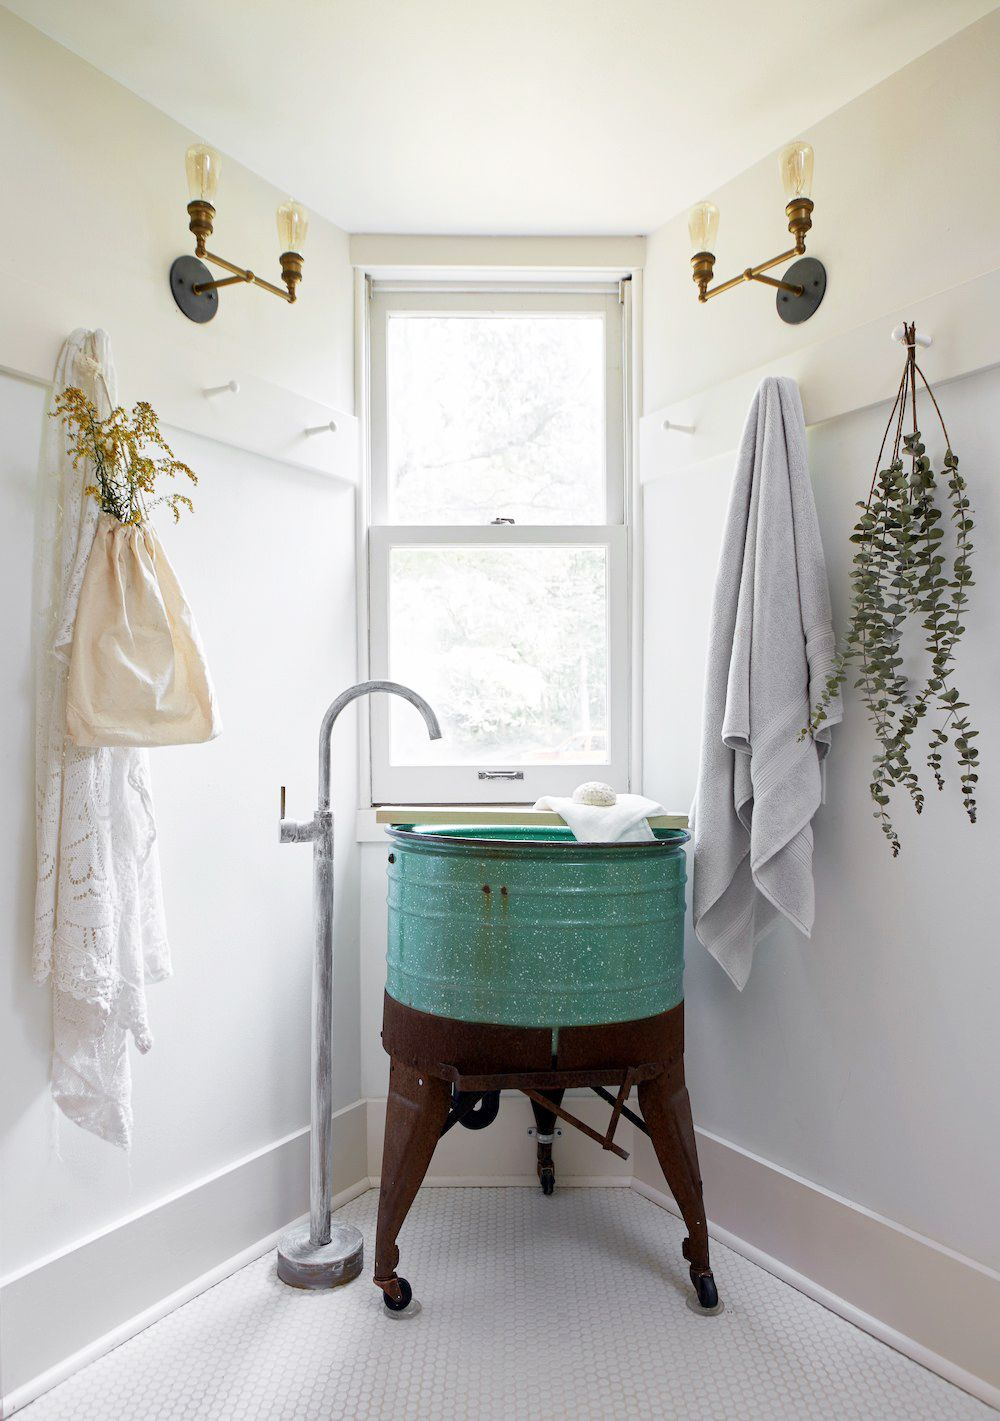 60 Best Bathroom Designs Photos Of Beautiful Bathroom Ideas To Try regarding sizing 1000 X 1421